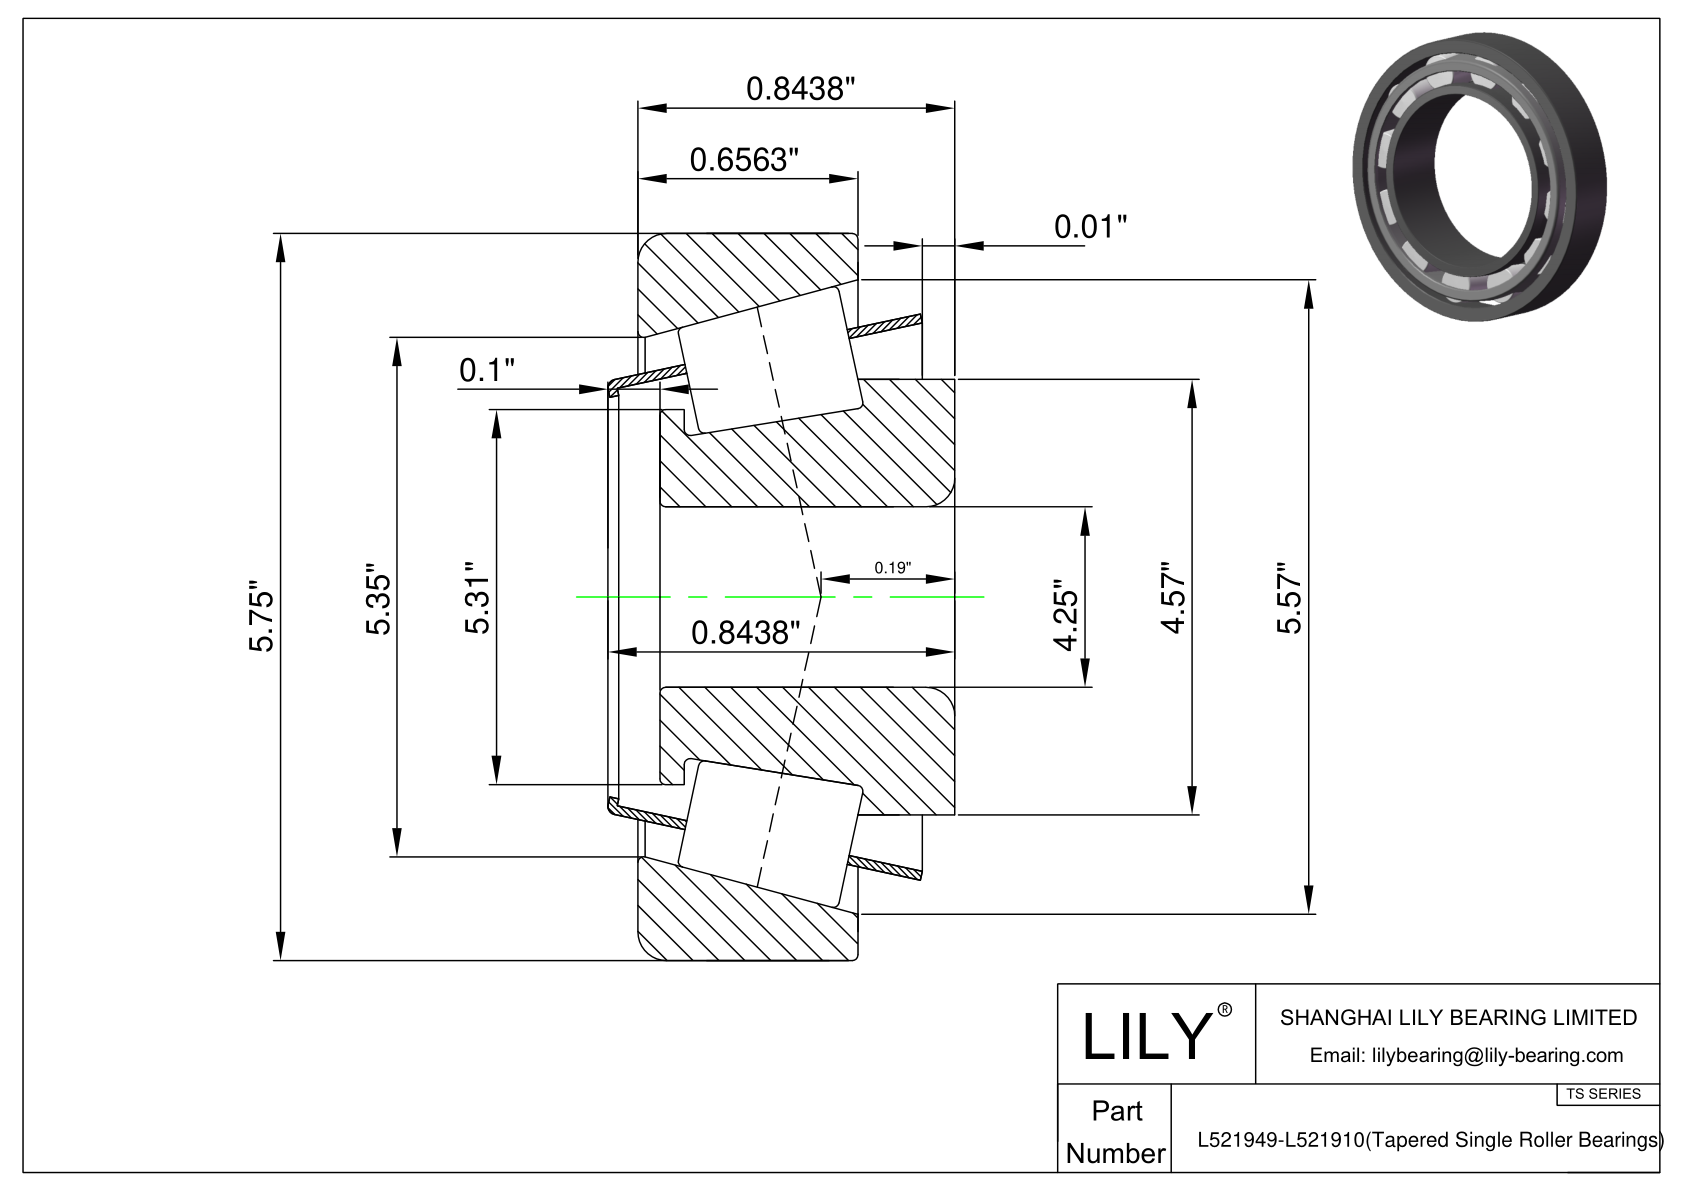 L521949-L521910 TS系列(圆锥单滚子轴承)(英制) CAD图形